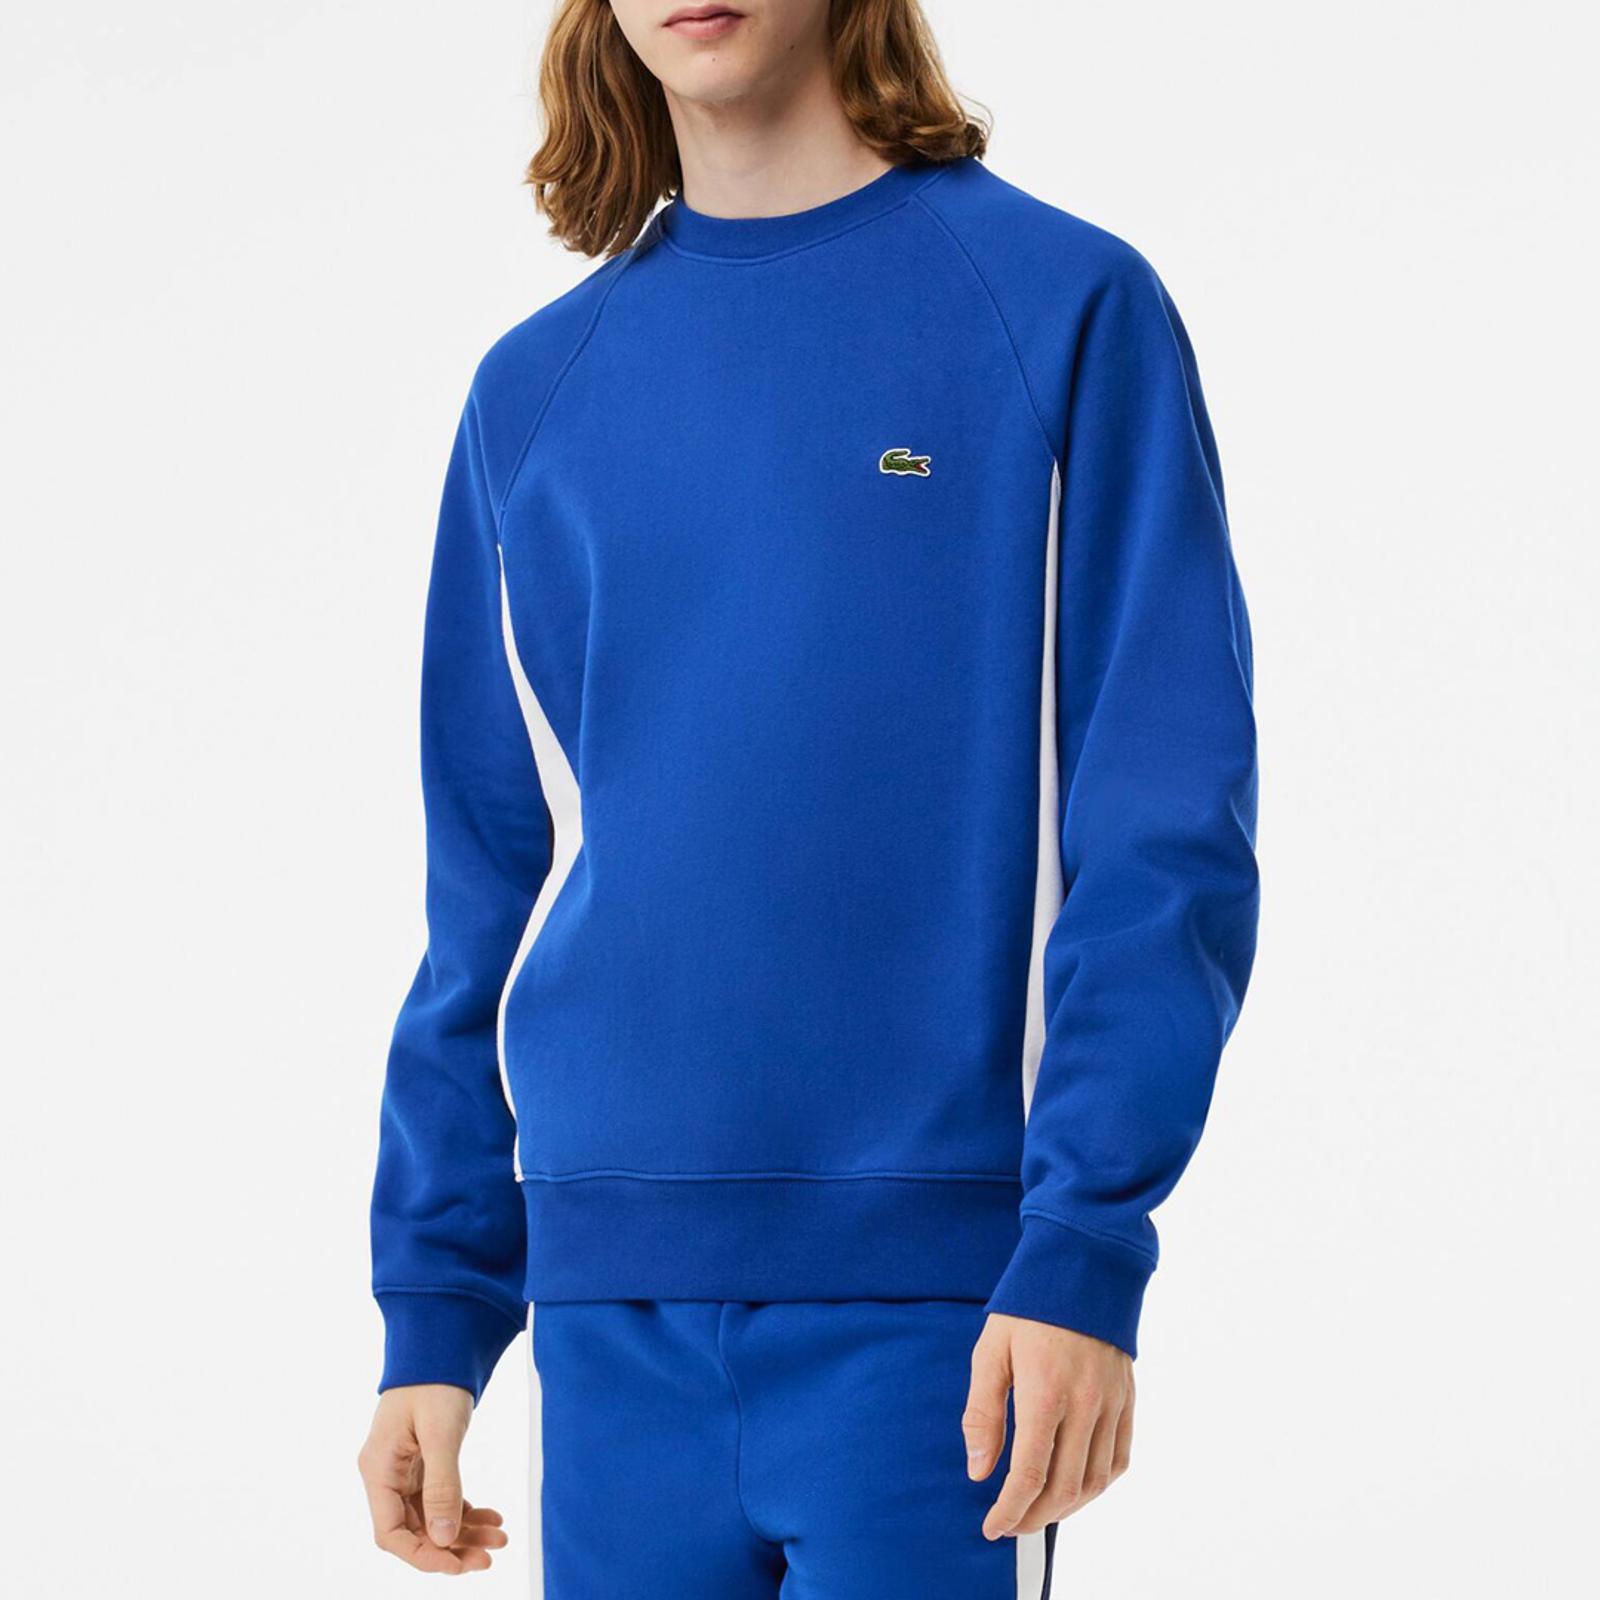 Blue Crew Neck Branded Sweatshirt - BrandAlley